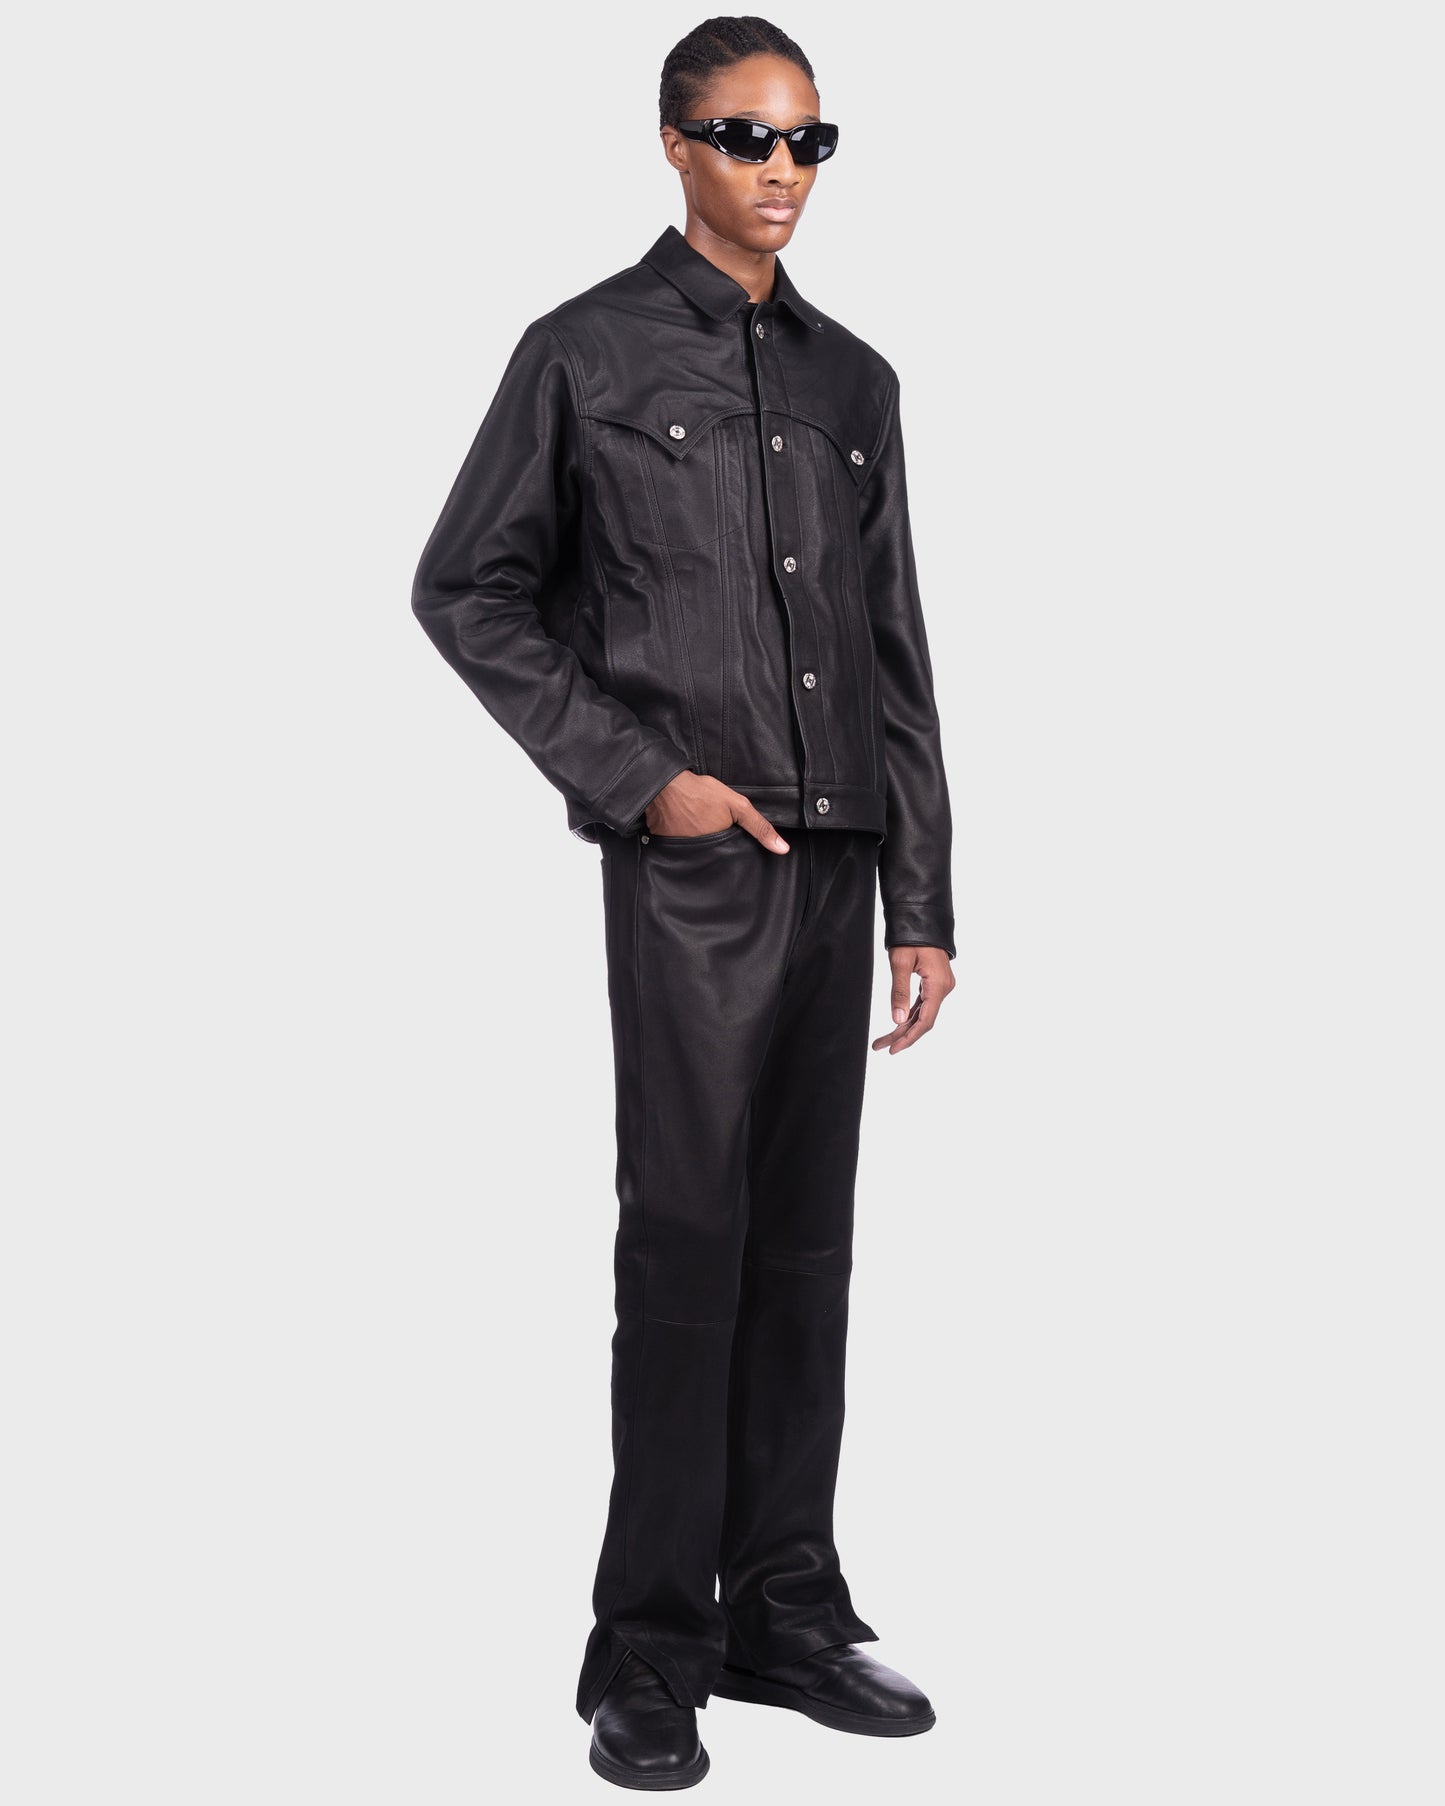 Leather Tulle Trucker Jacket - Black